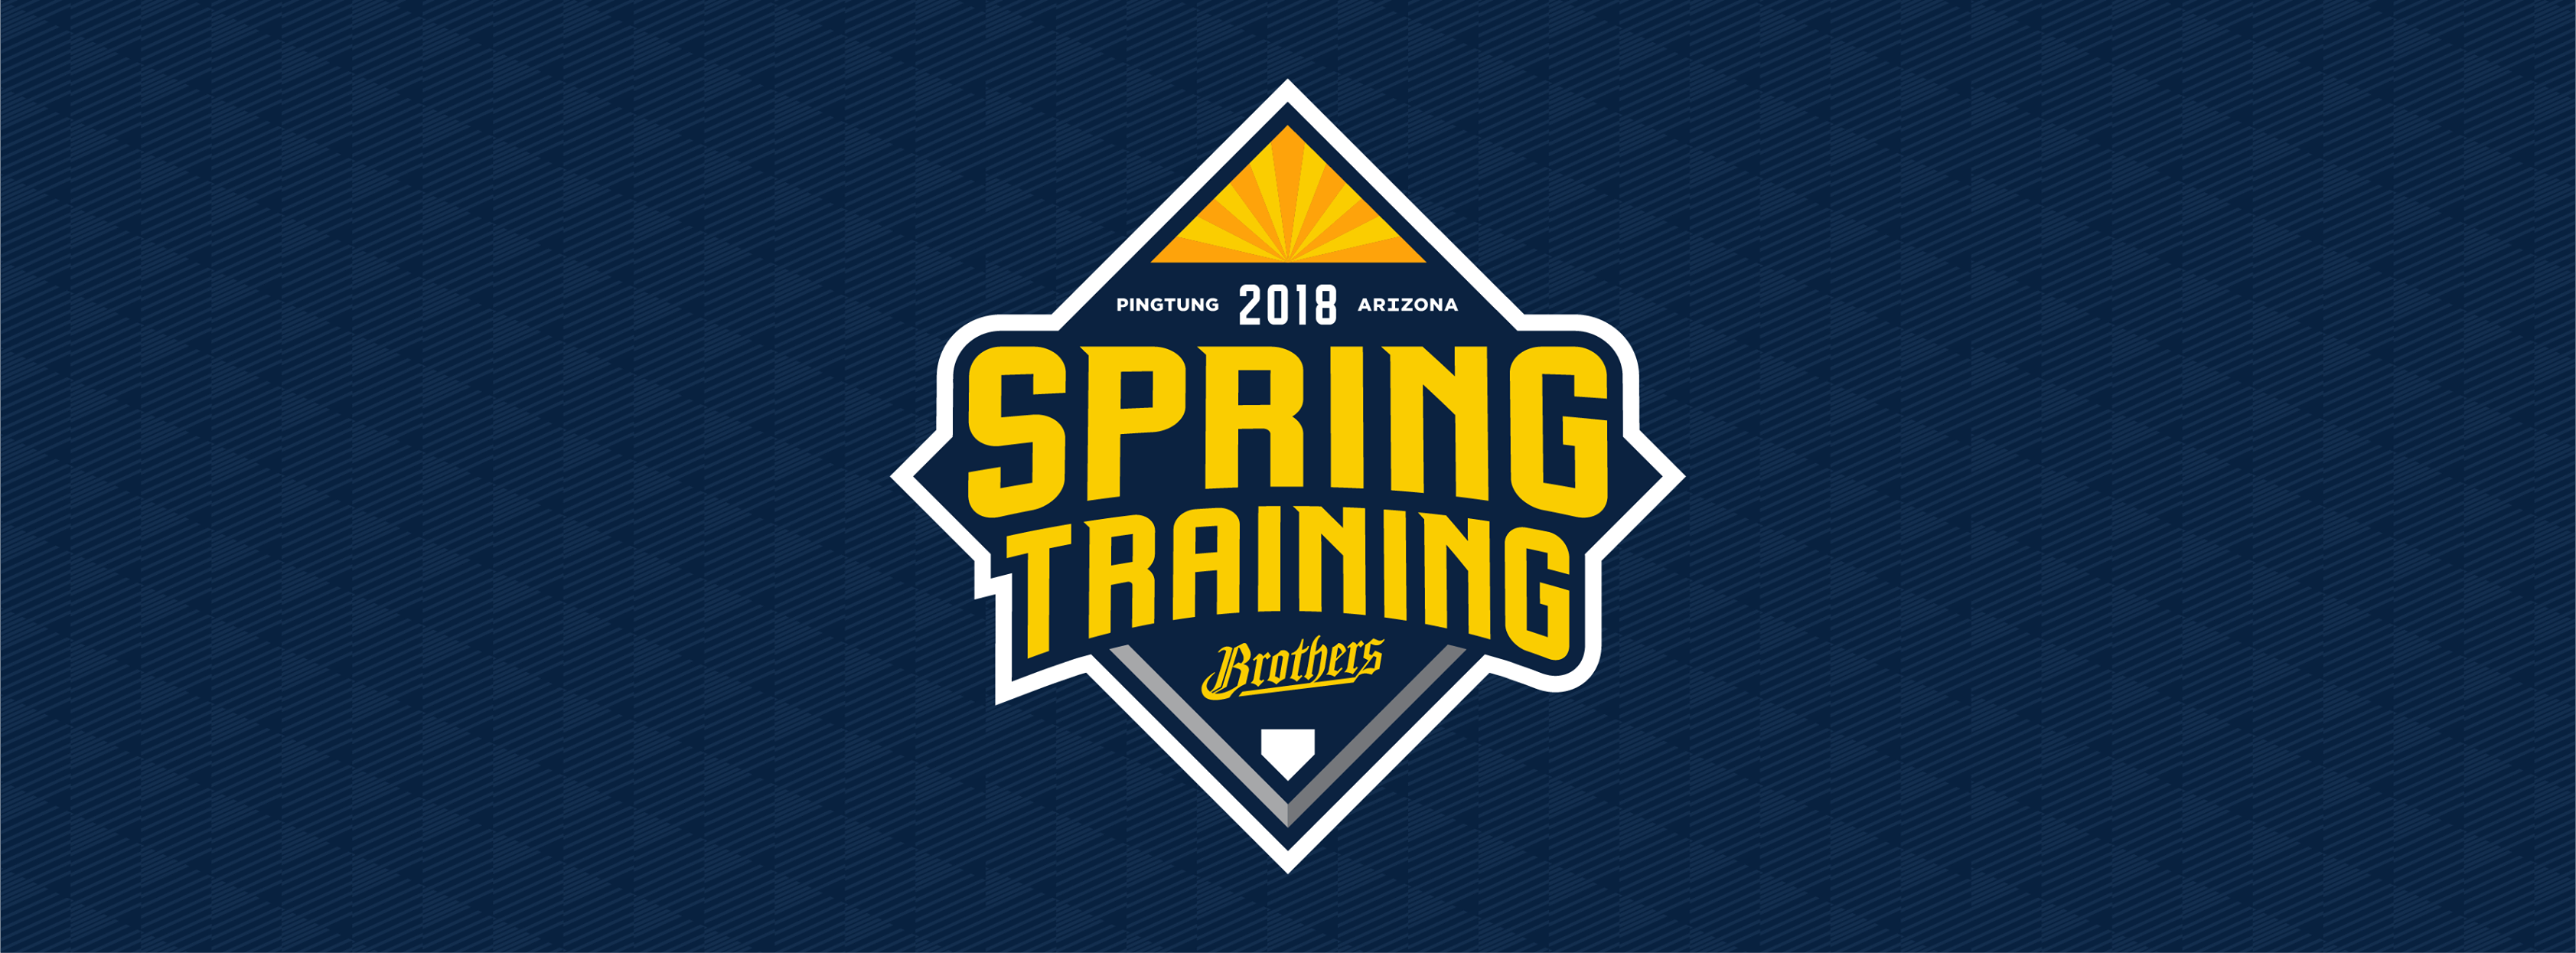 Chinatrust Brothers 2018 spring training logo